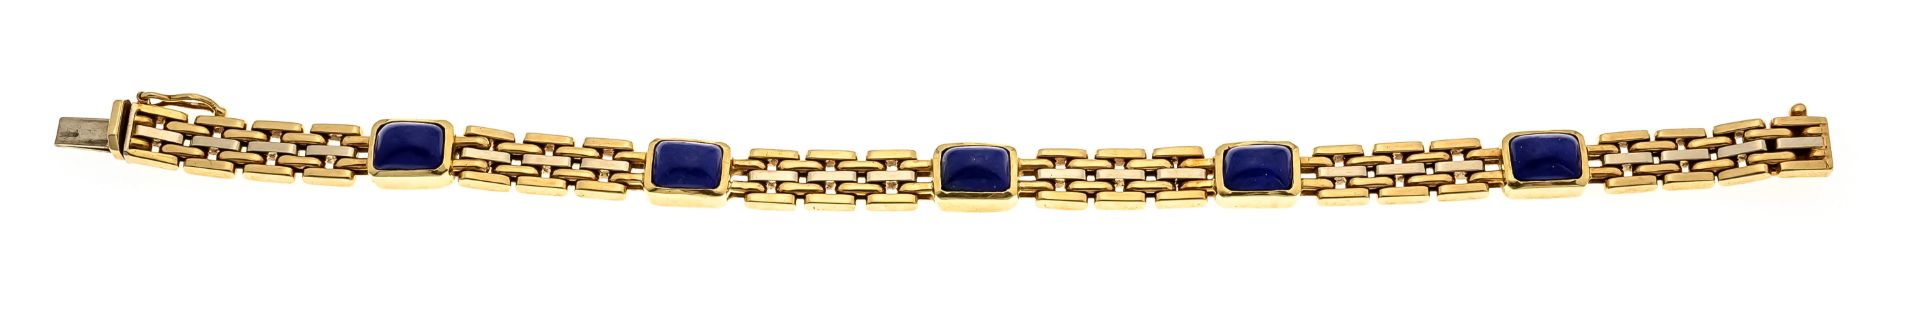 Lapilazuli bracelet GG/WG 585/000 with 5 fine lapilazuli cabochons 7 x 5 mm, box clasp with SI - Image 2 of 2